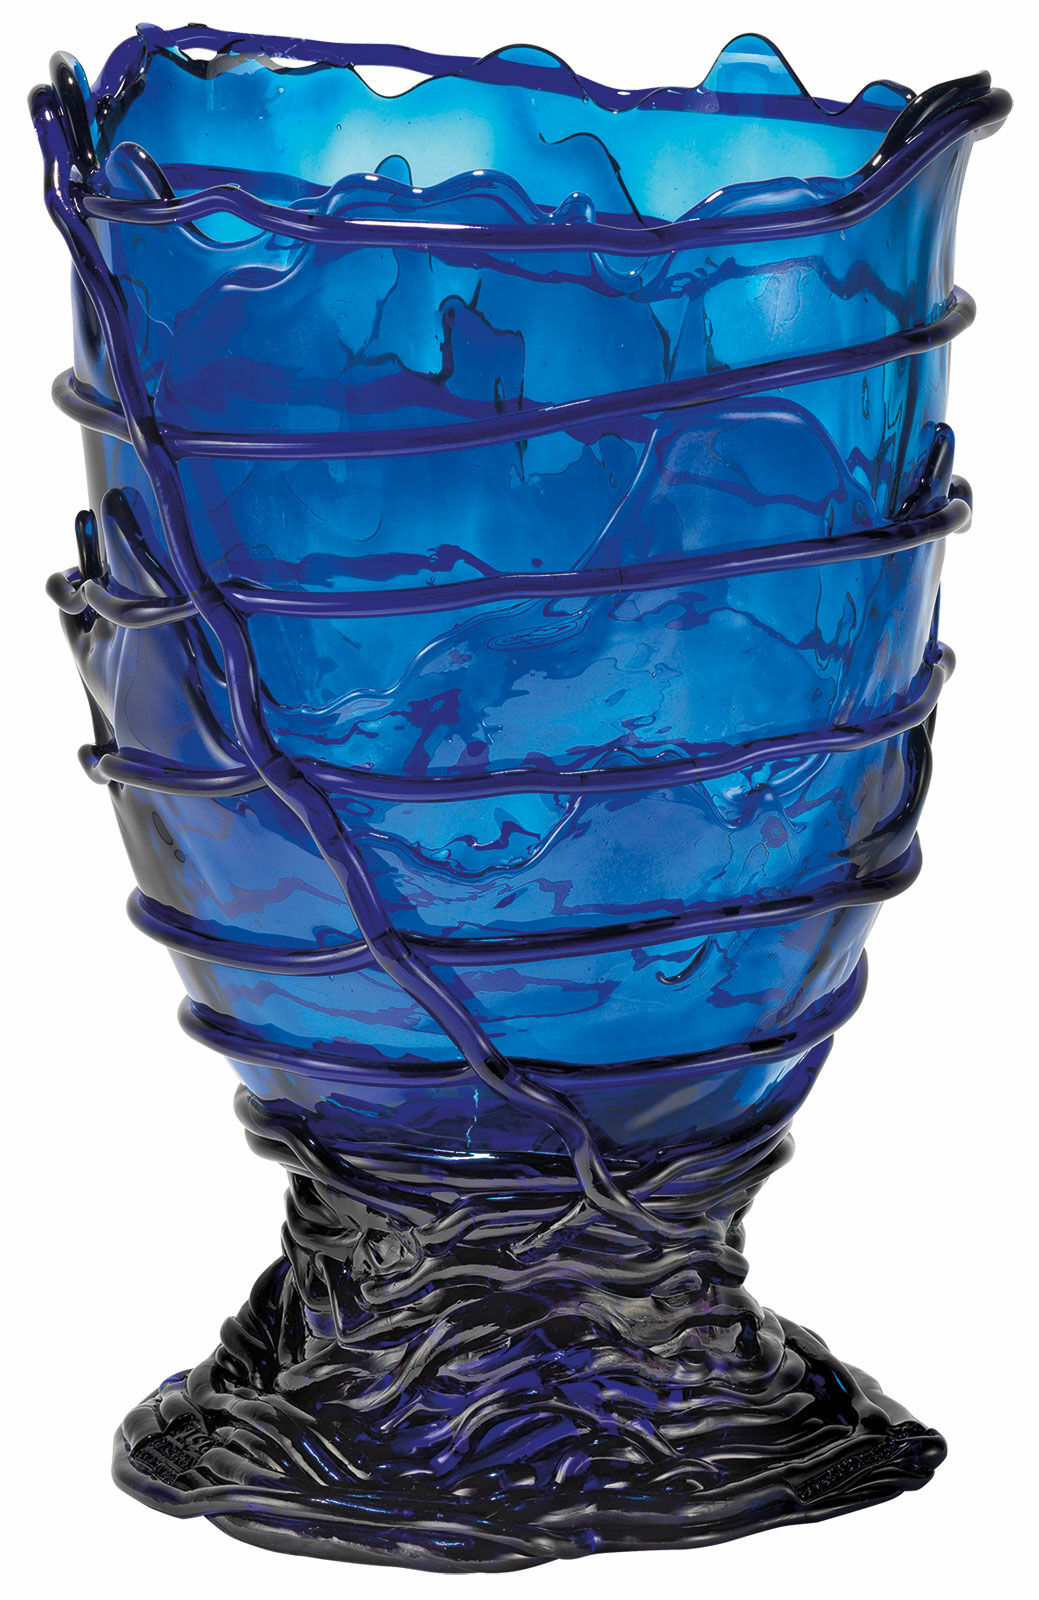 Vase "Pompitu II Blue", silicone by Gaetano Pesce